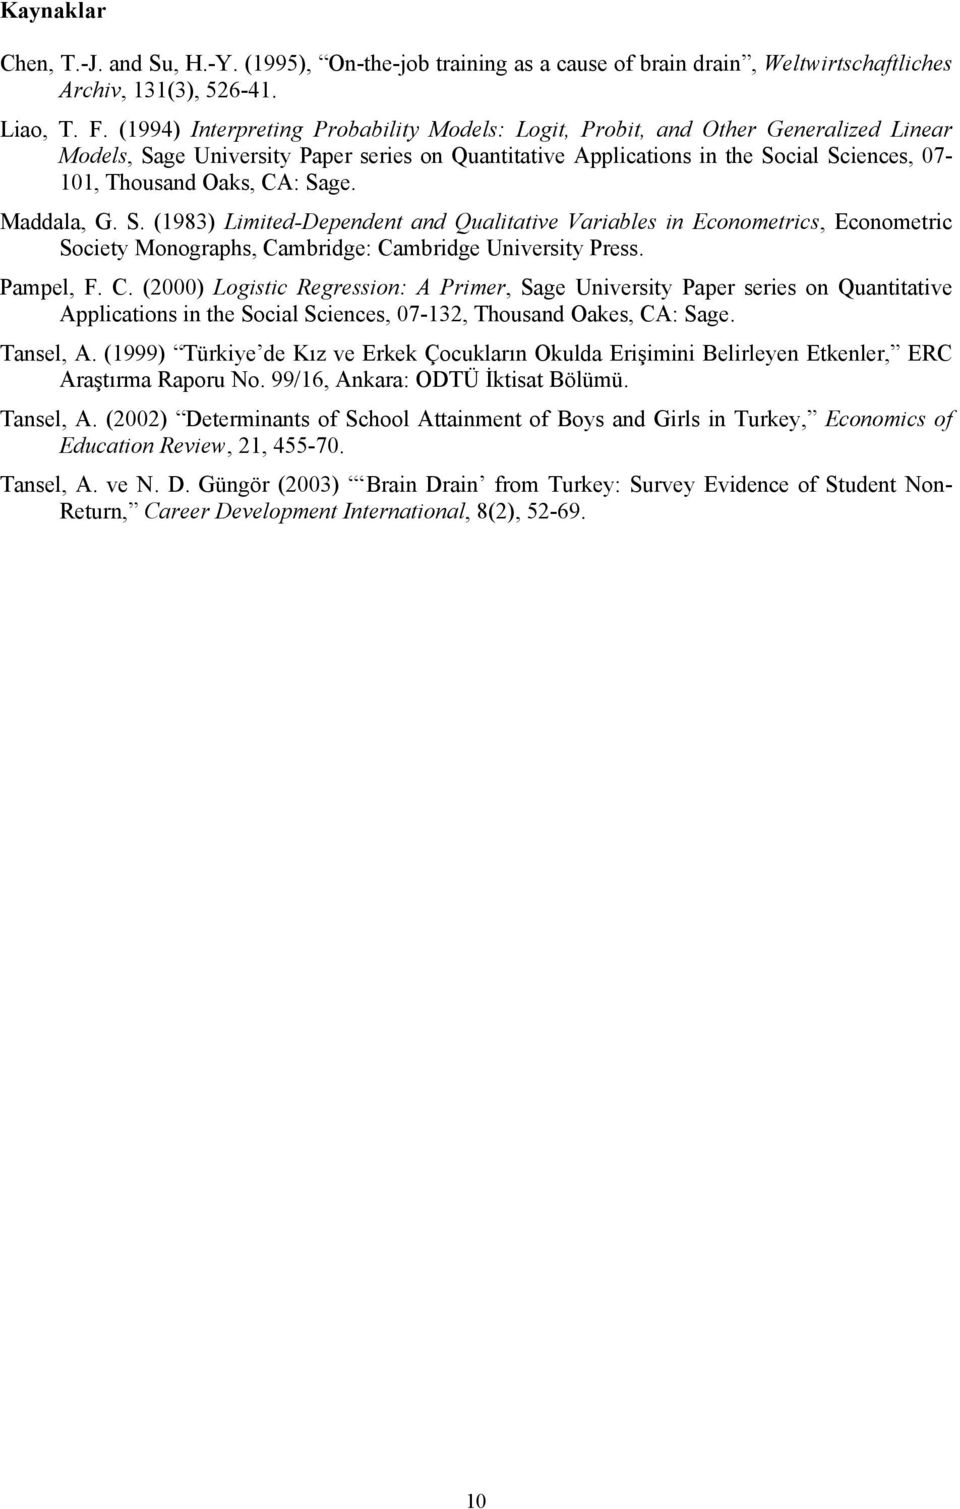 Maddala, G. S. (1983) Lmted-Dependent and Qualtatve Varables n Econometrcs, Econometrc Socety Monographs, Ca